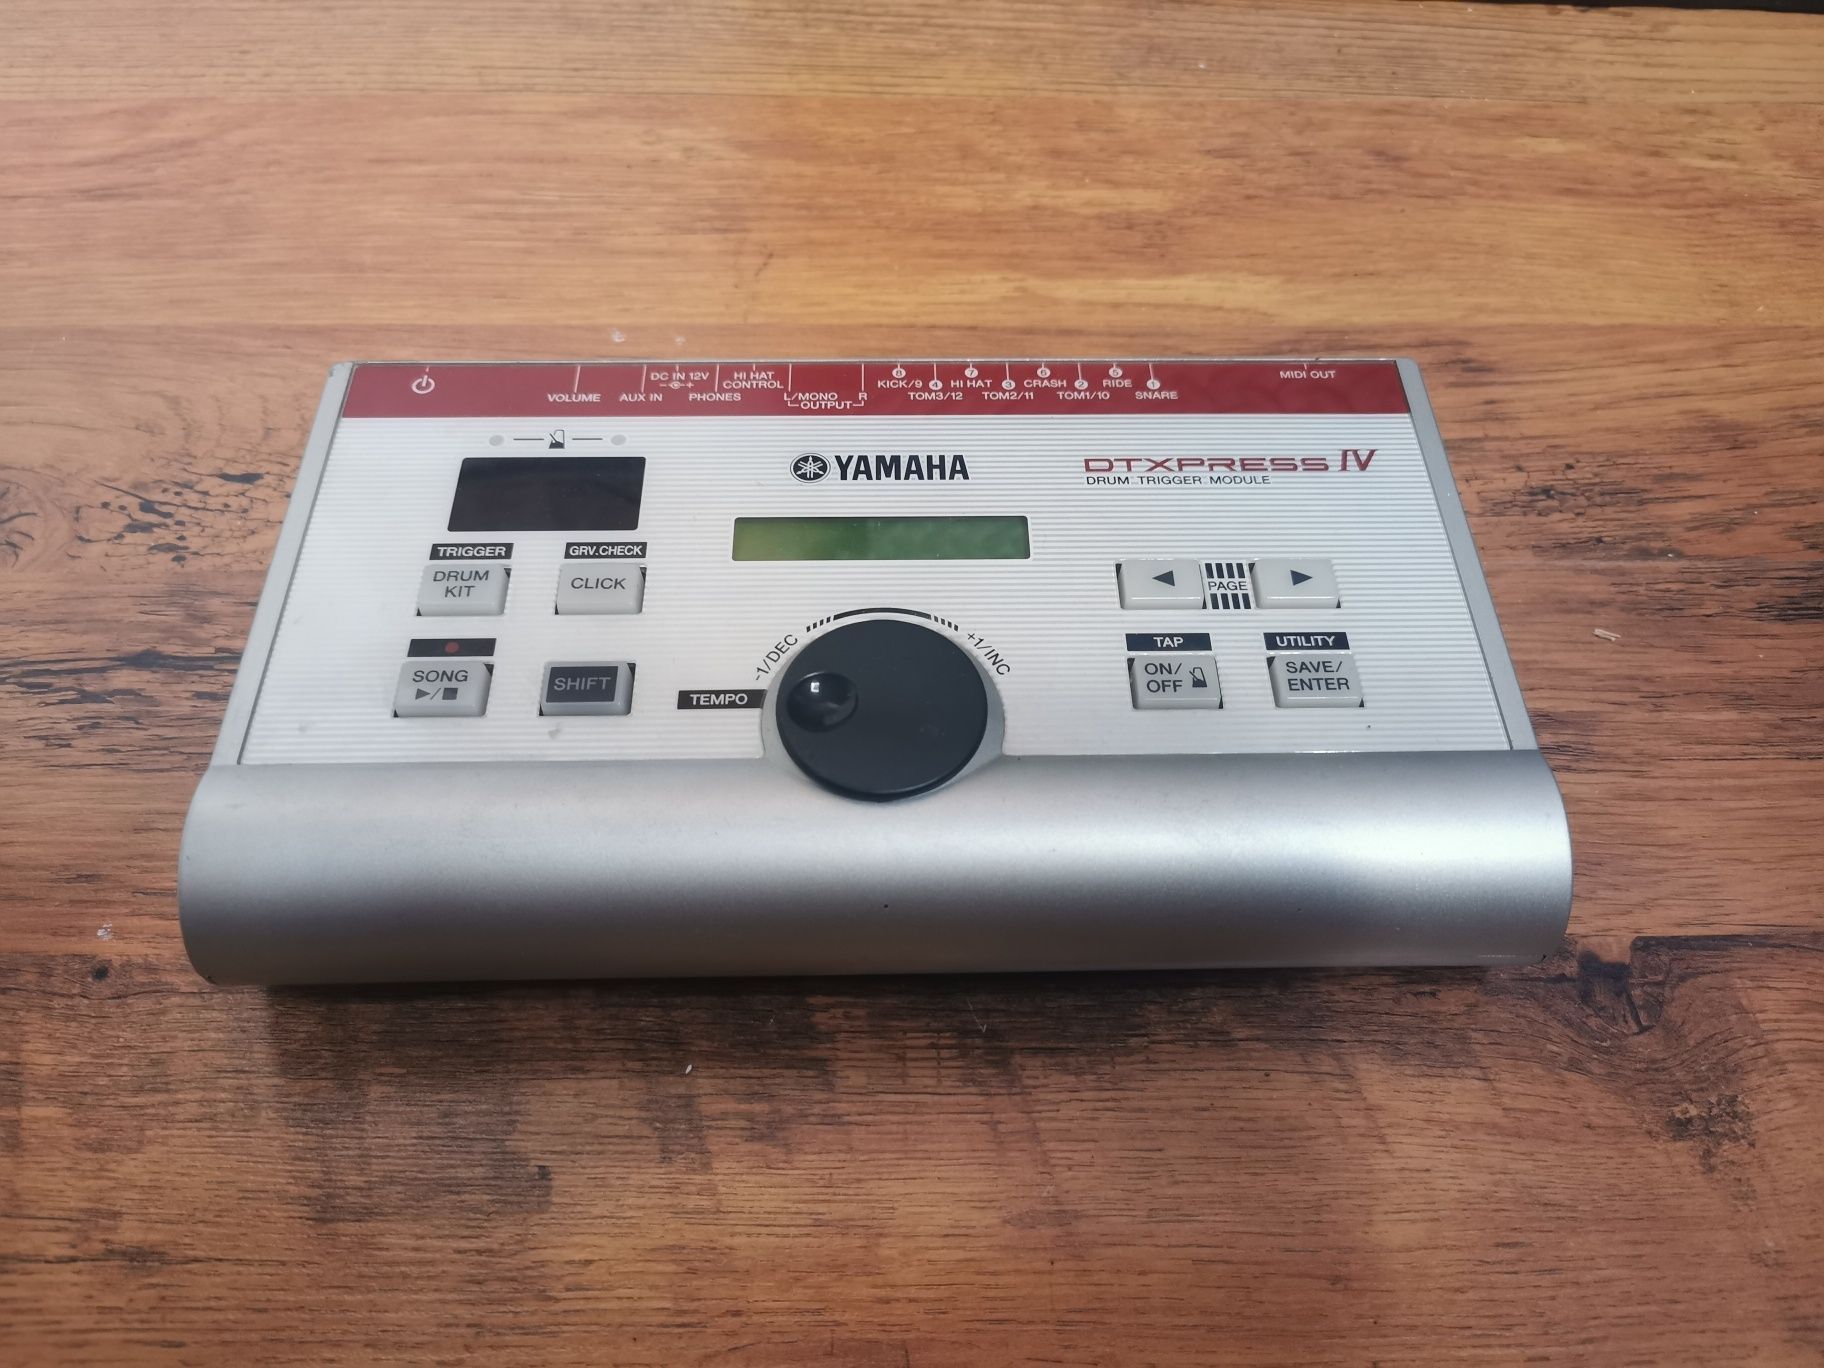 Yamaha DTX-Press IV